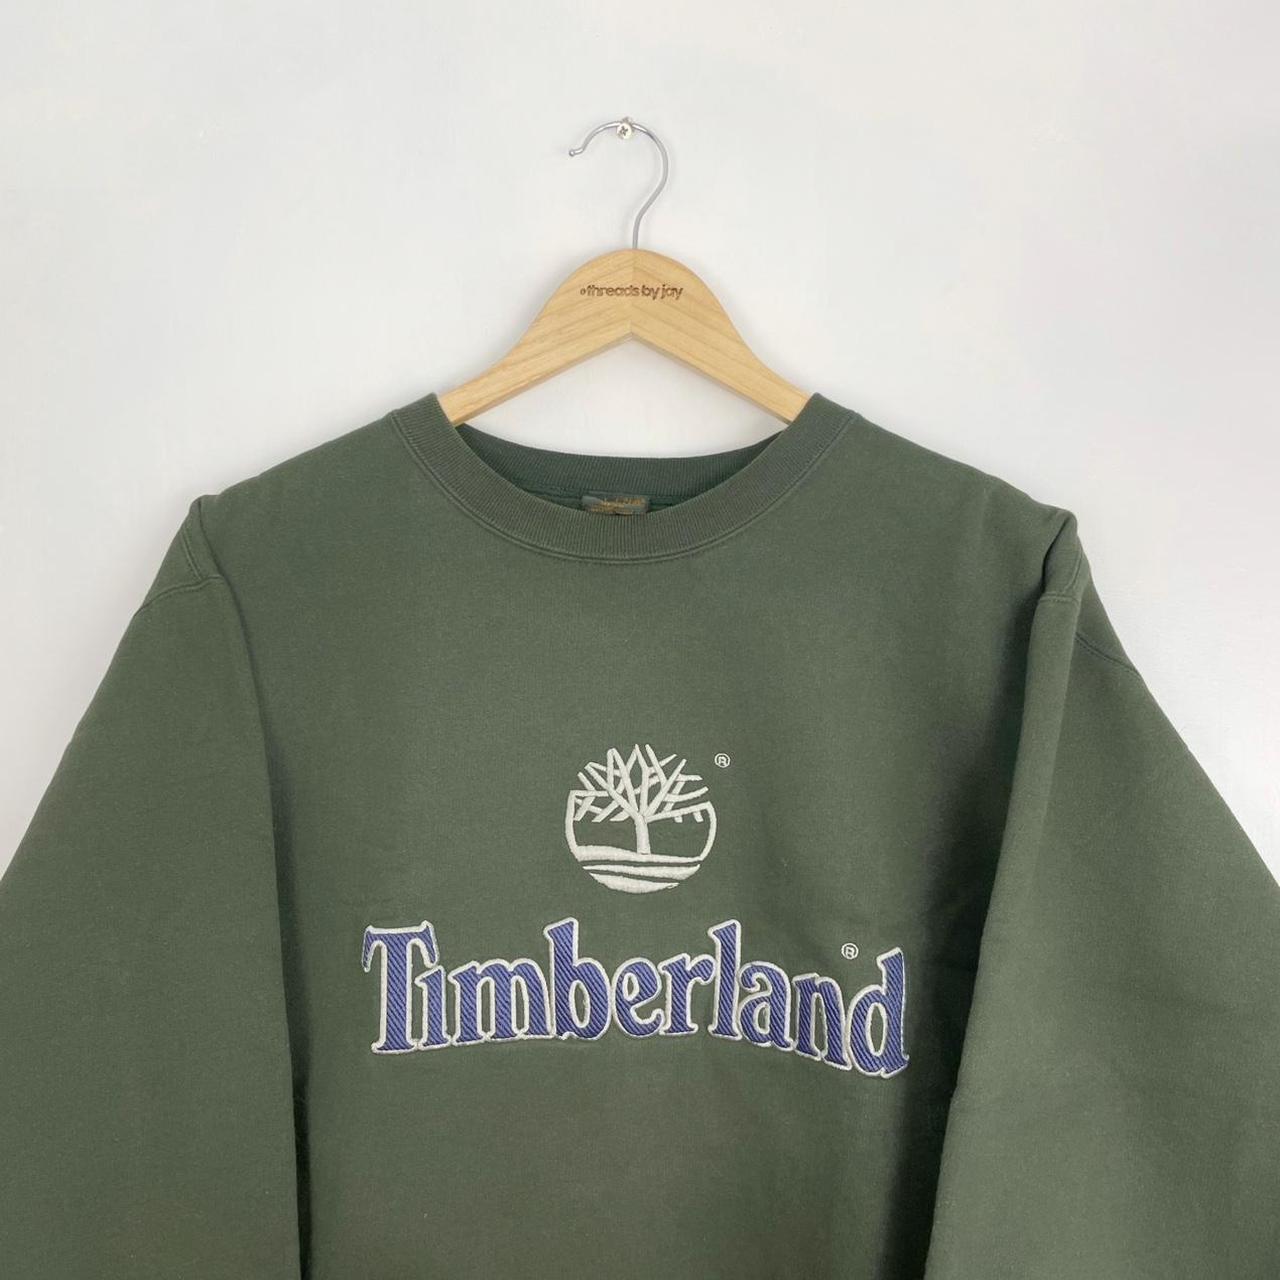 Stunning 1990’S Timberland Sweatshirt Recommended... - Depop